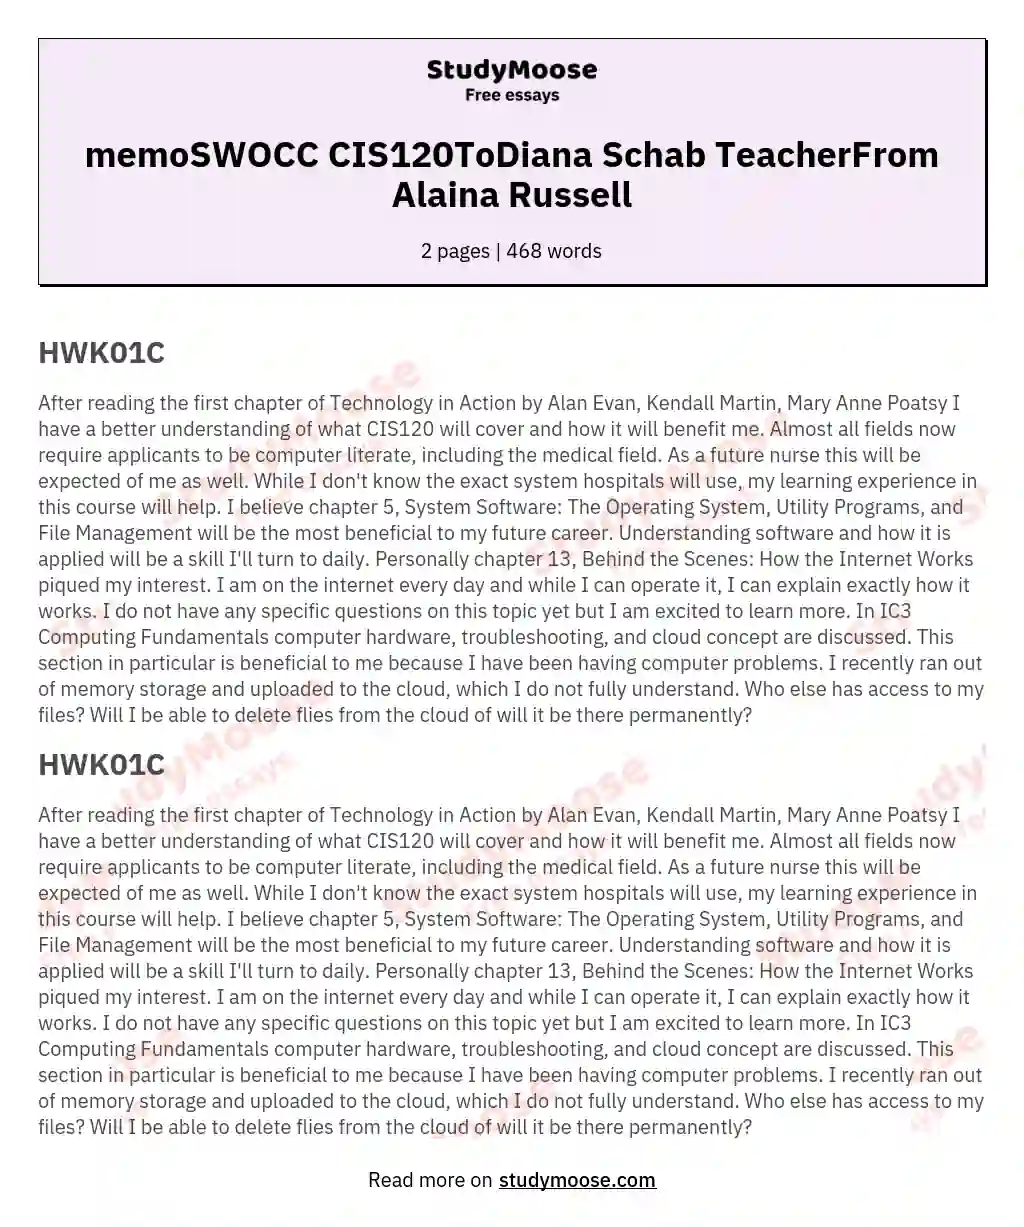 memoSWOCC CIS120ToDiana Schab TeacherFrom Alaina Russell essay